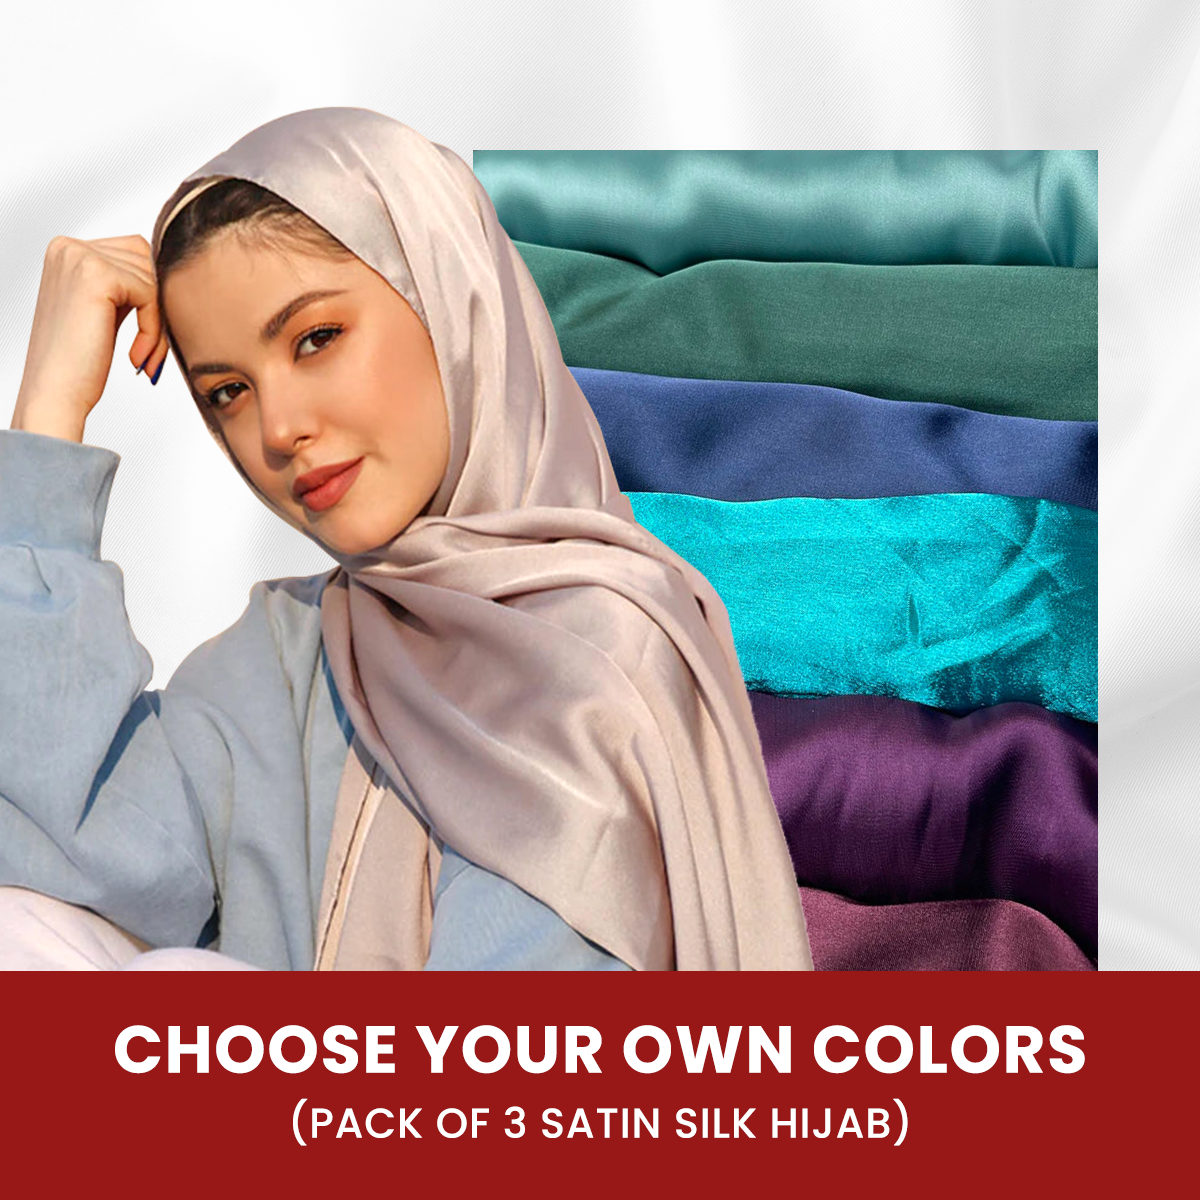 Pack of 3 Satin Silk Hijab